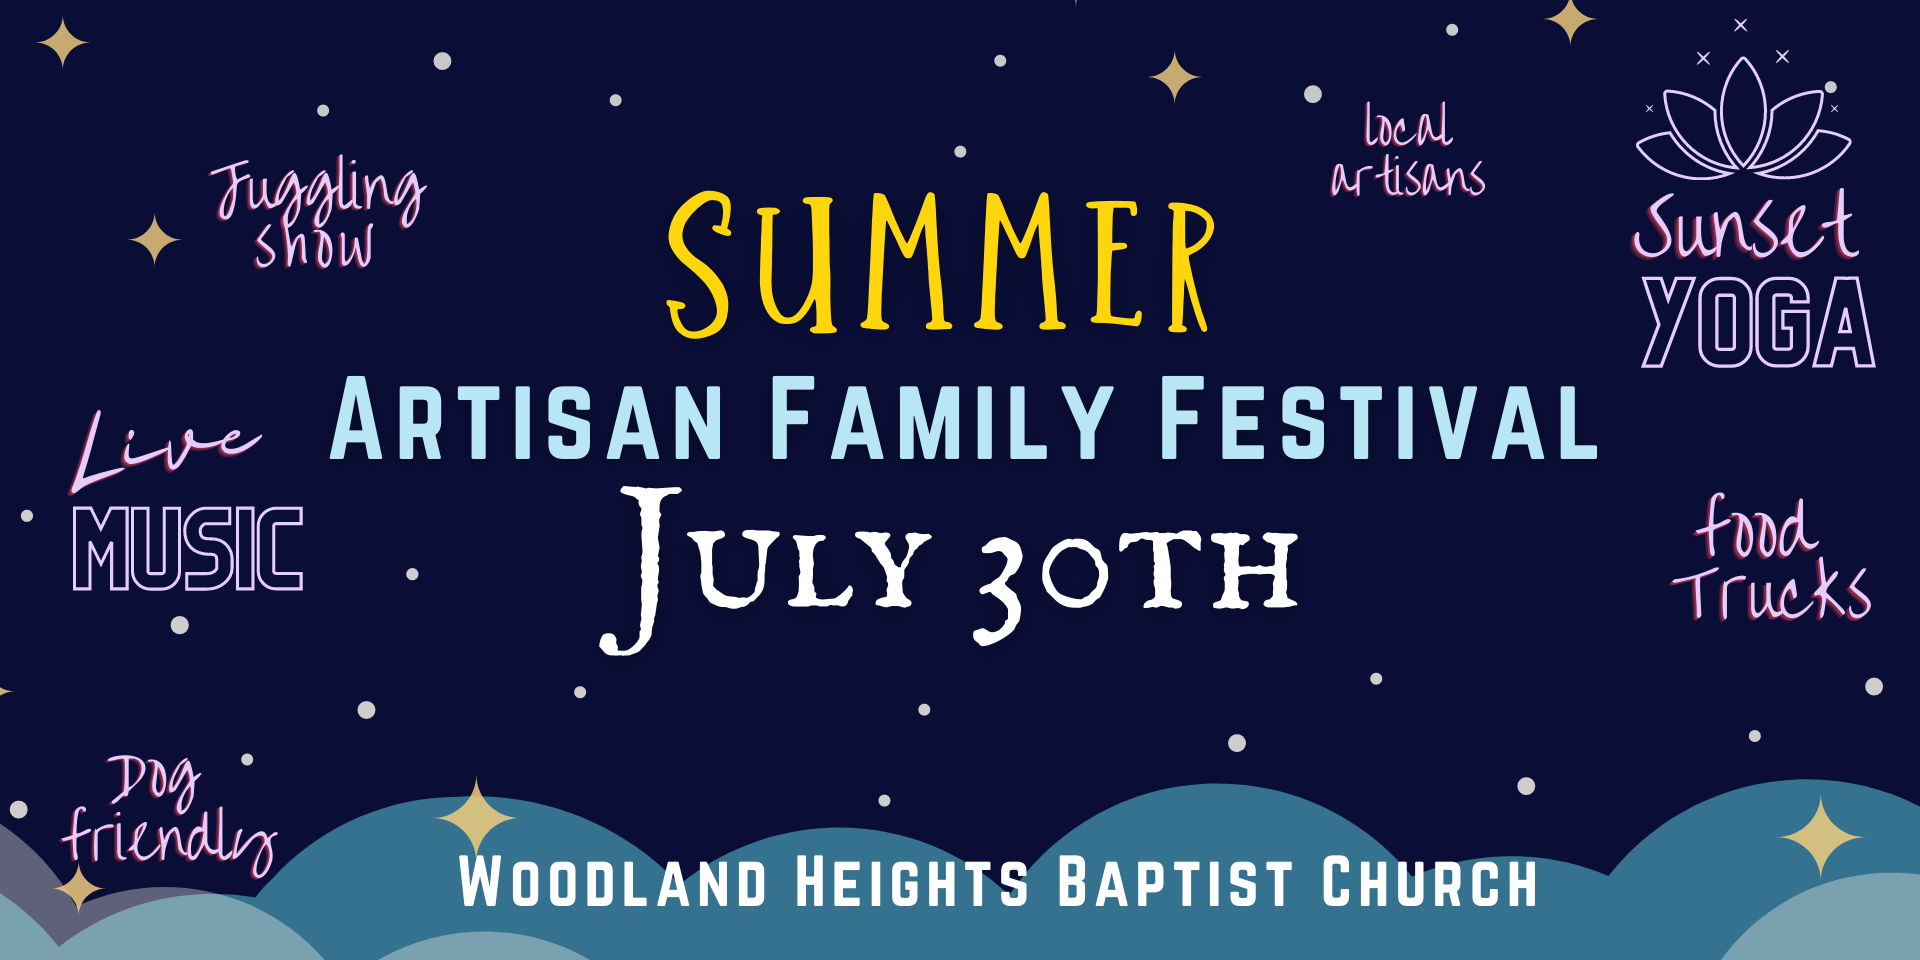 Summer Nights Artisan Family Festival promotional image